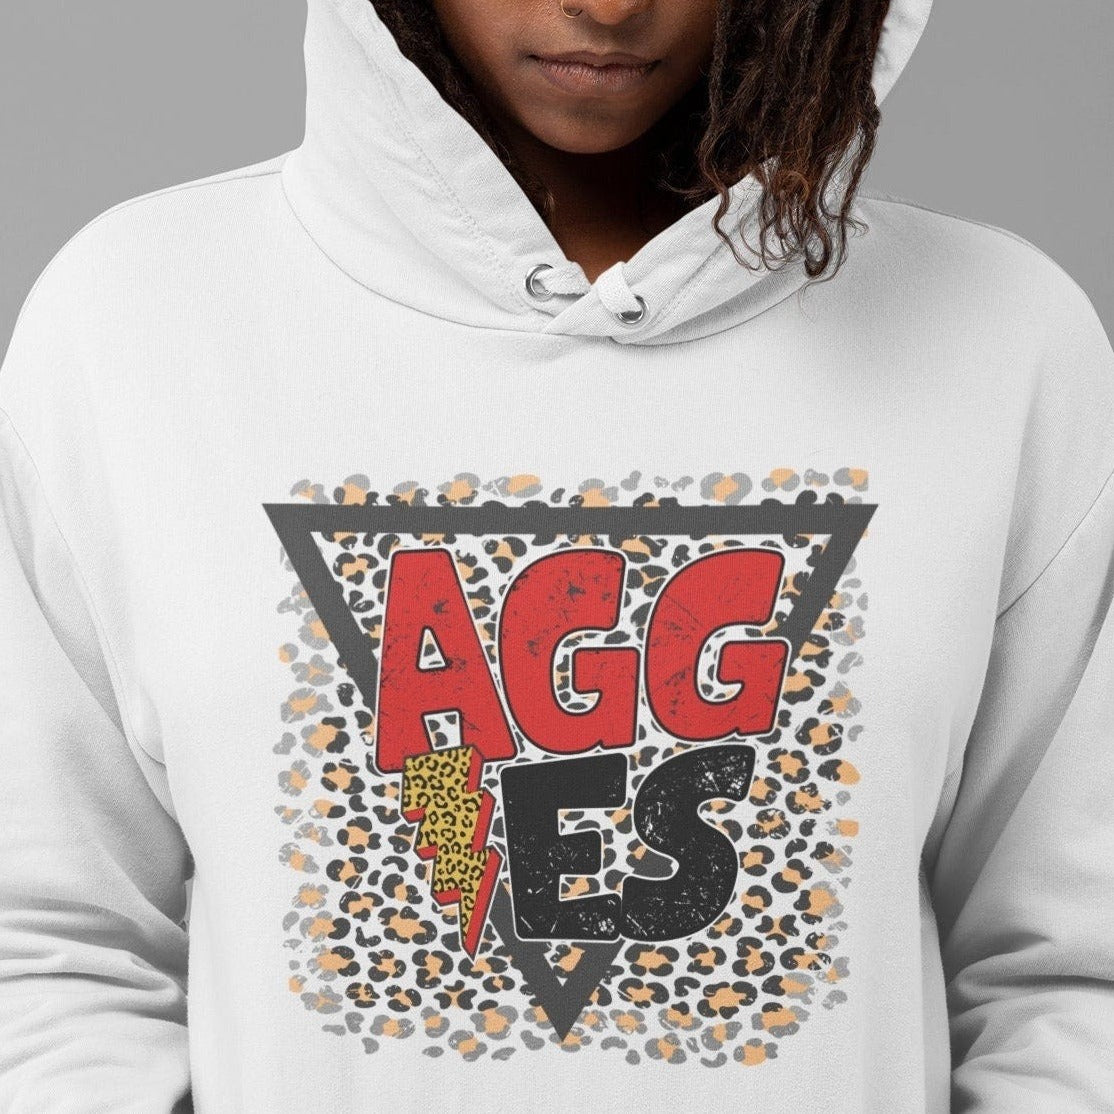 Aggies Team png, Aggies Team red and black Leopard Lightning Bolt design png, Digital download